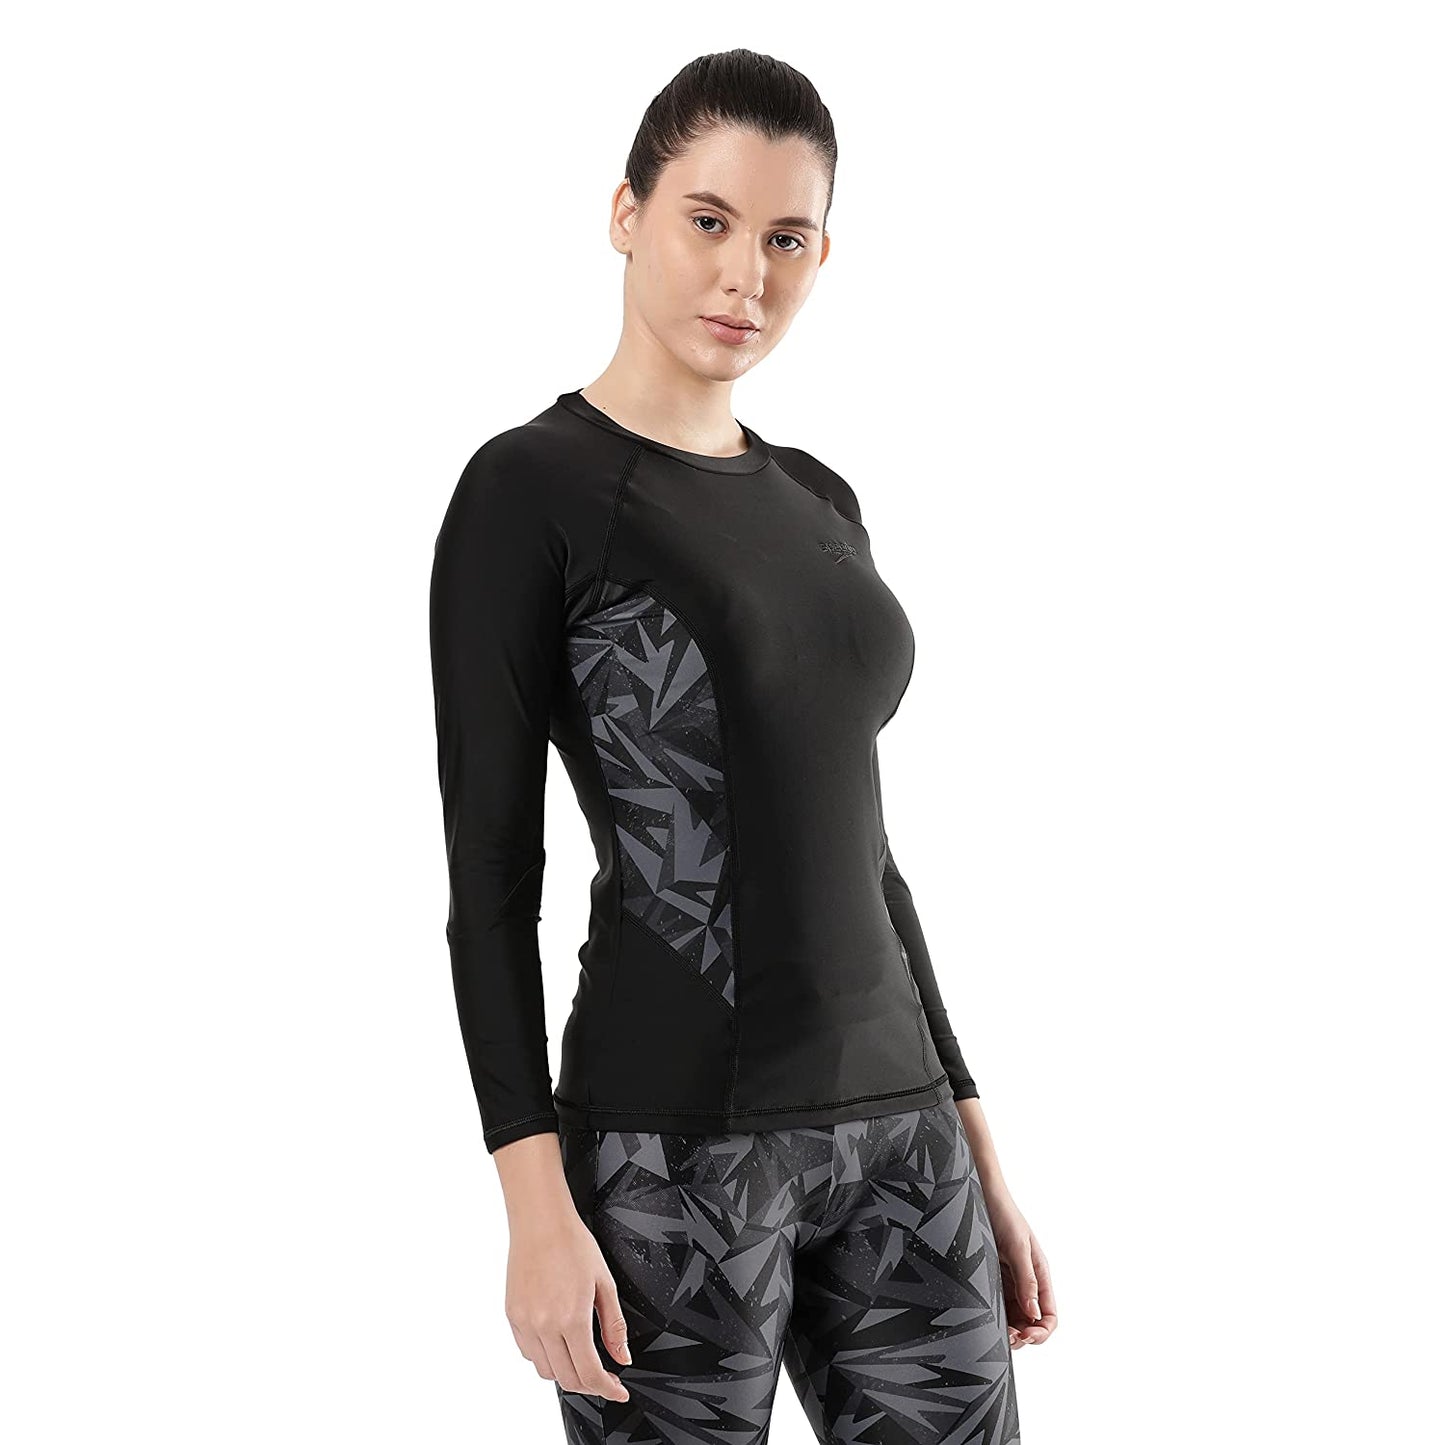 Speedo Female Hyperboom Allover Rashtop, Black/Oxide Grey/Usa Charcoal - Best Price online Prokicksports.com